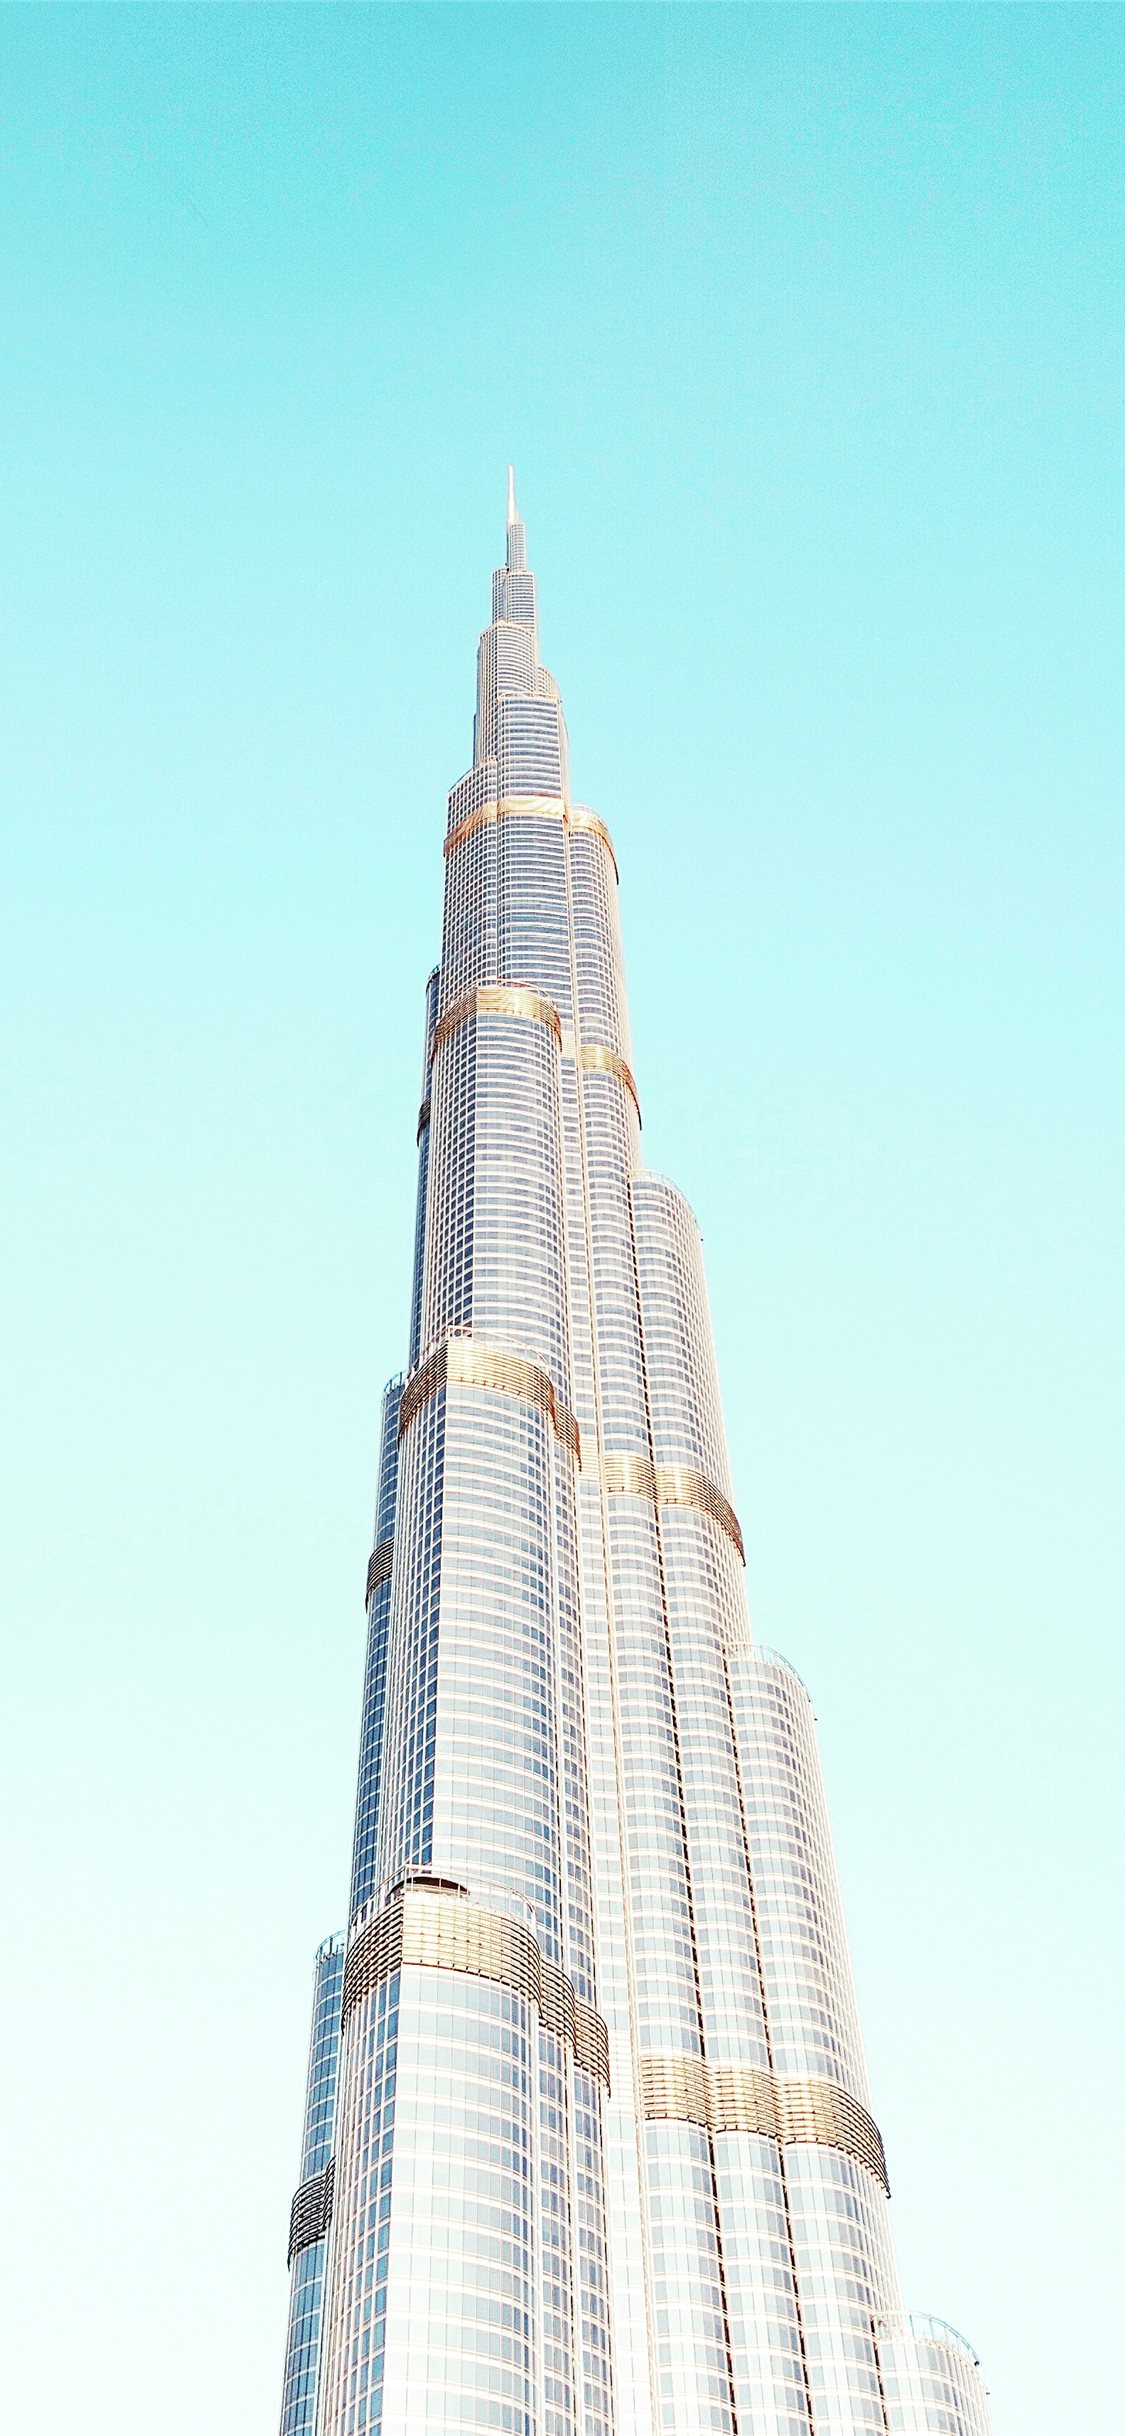 Burj Khalifa Photos Download The BEST Free Burj Khalifa Stock Photos  HD  Images